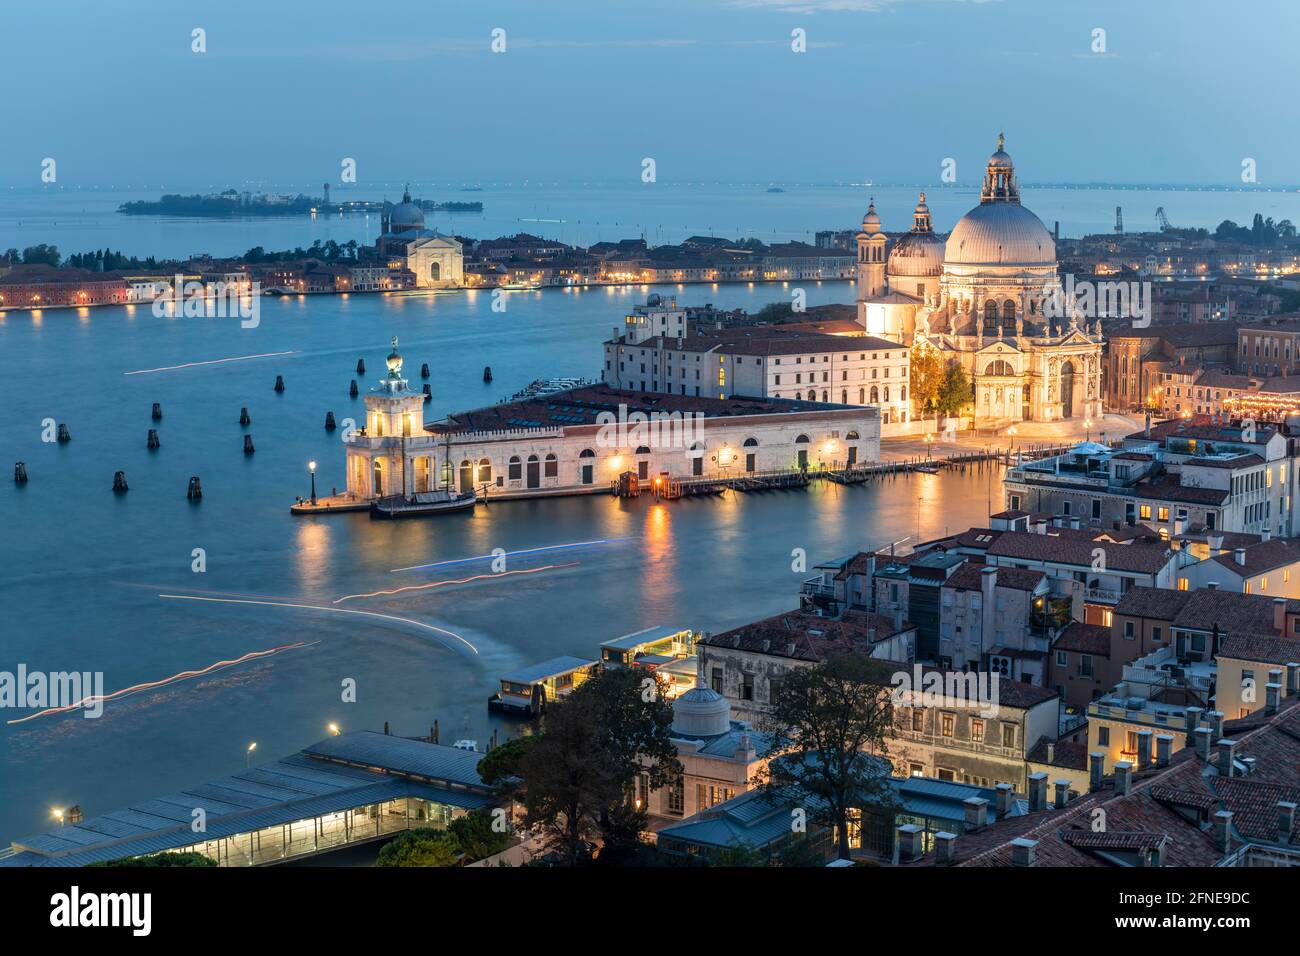 Evening atmosphere, Basilica di Santa Maria della Salute, view from the bell tower Campanile di San Marco, city view of Venice, Veneto, Italy Stock Photo